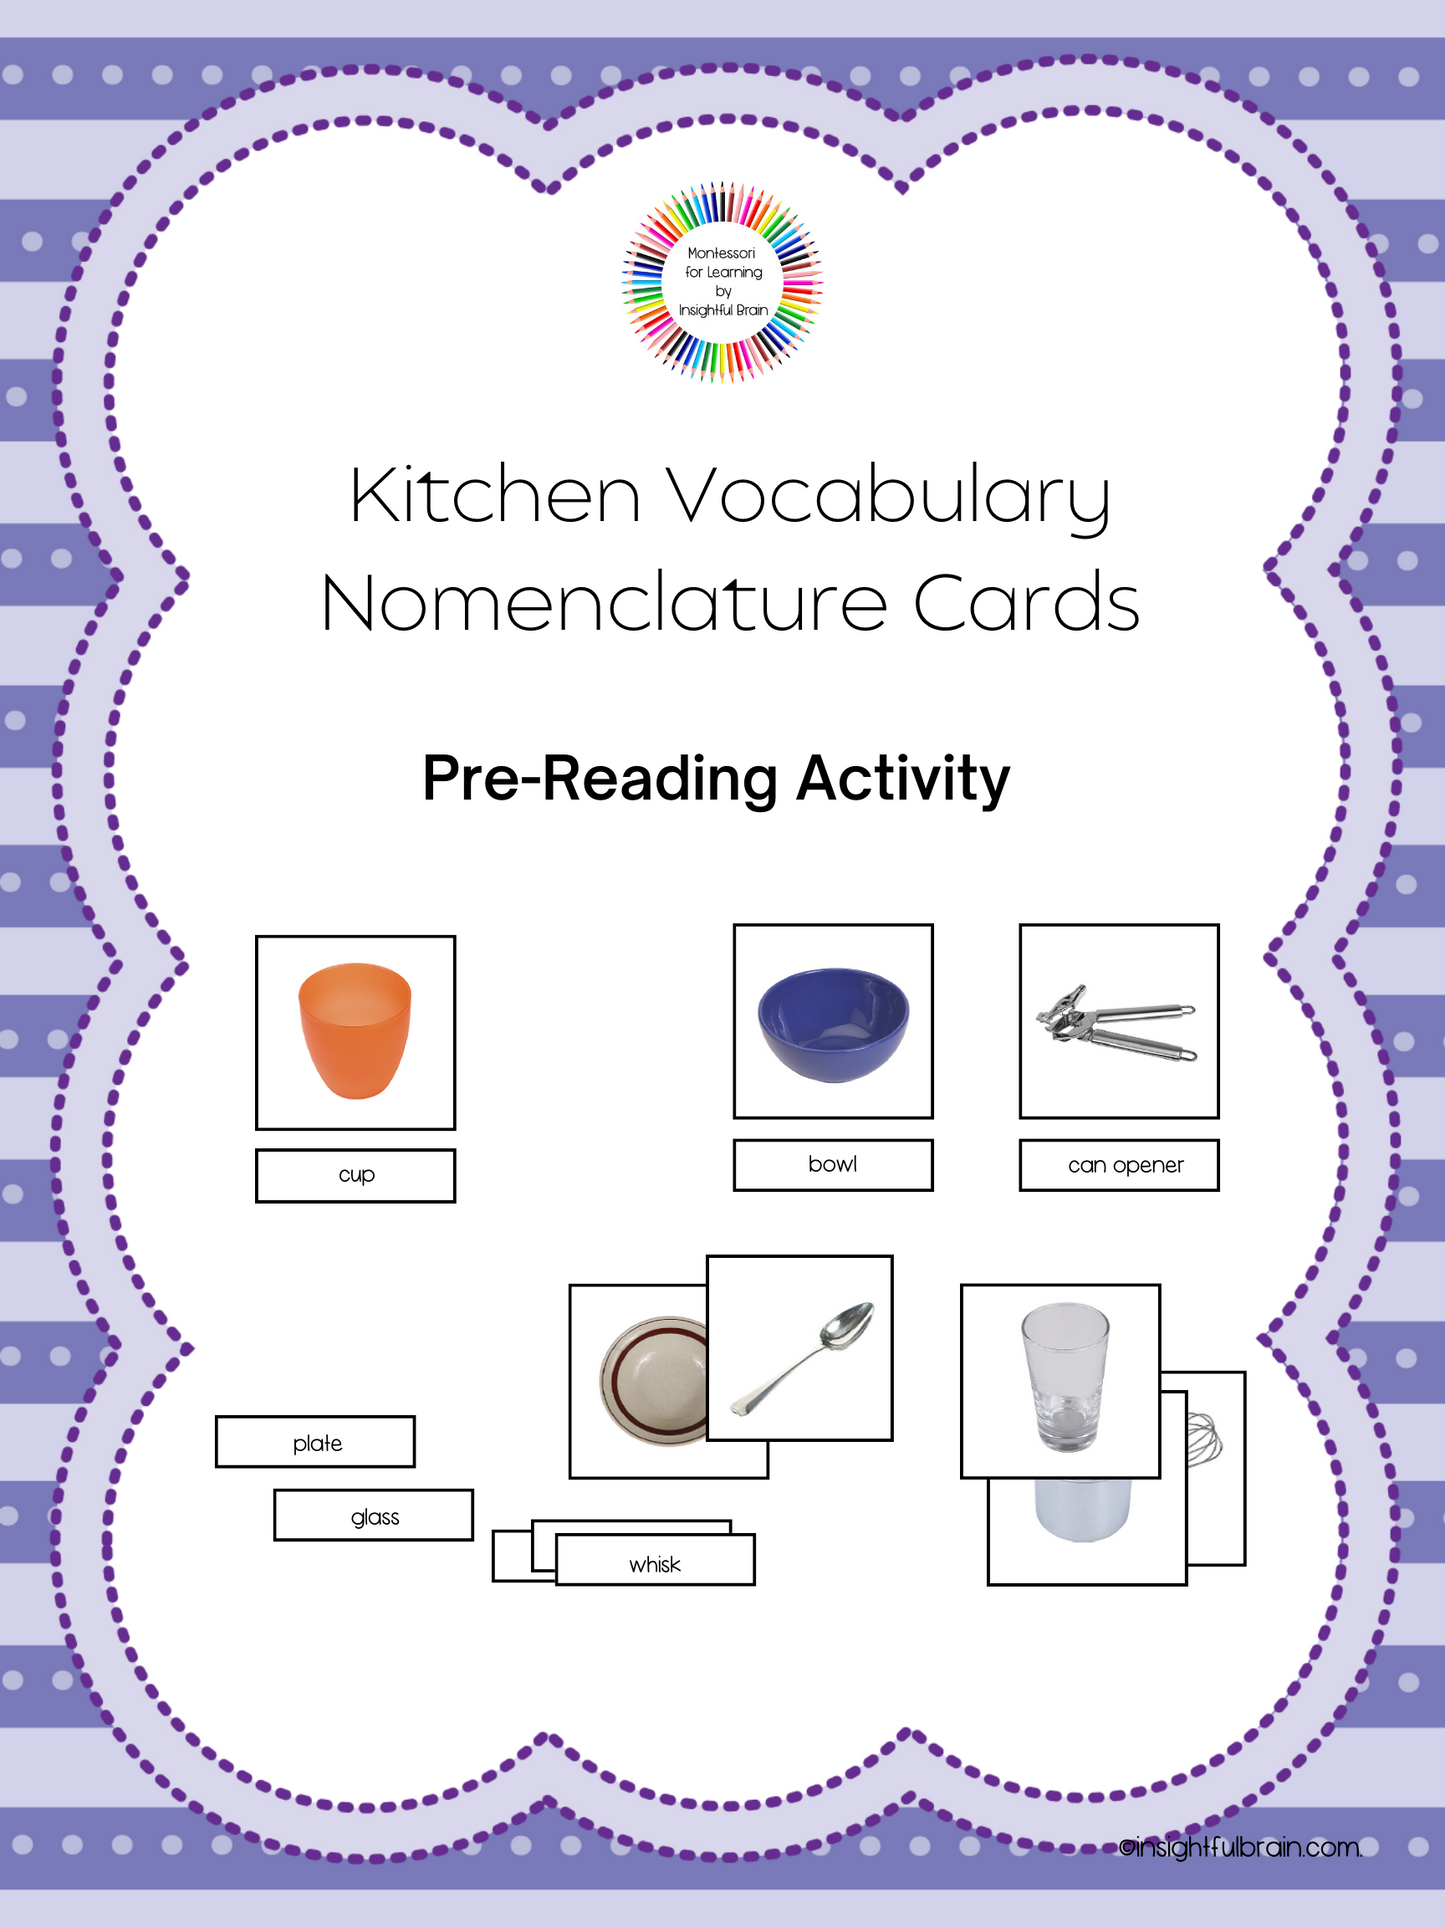 Kitchen Vocabulary Nomenclature Cards